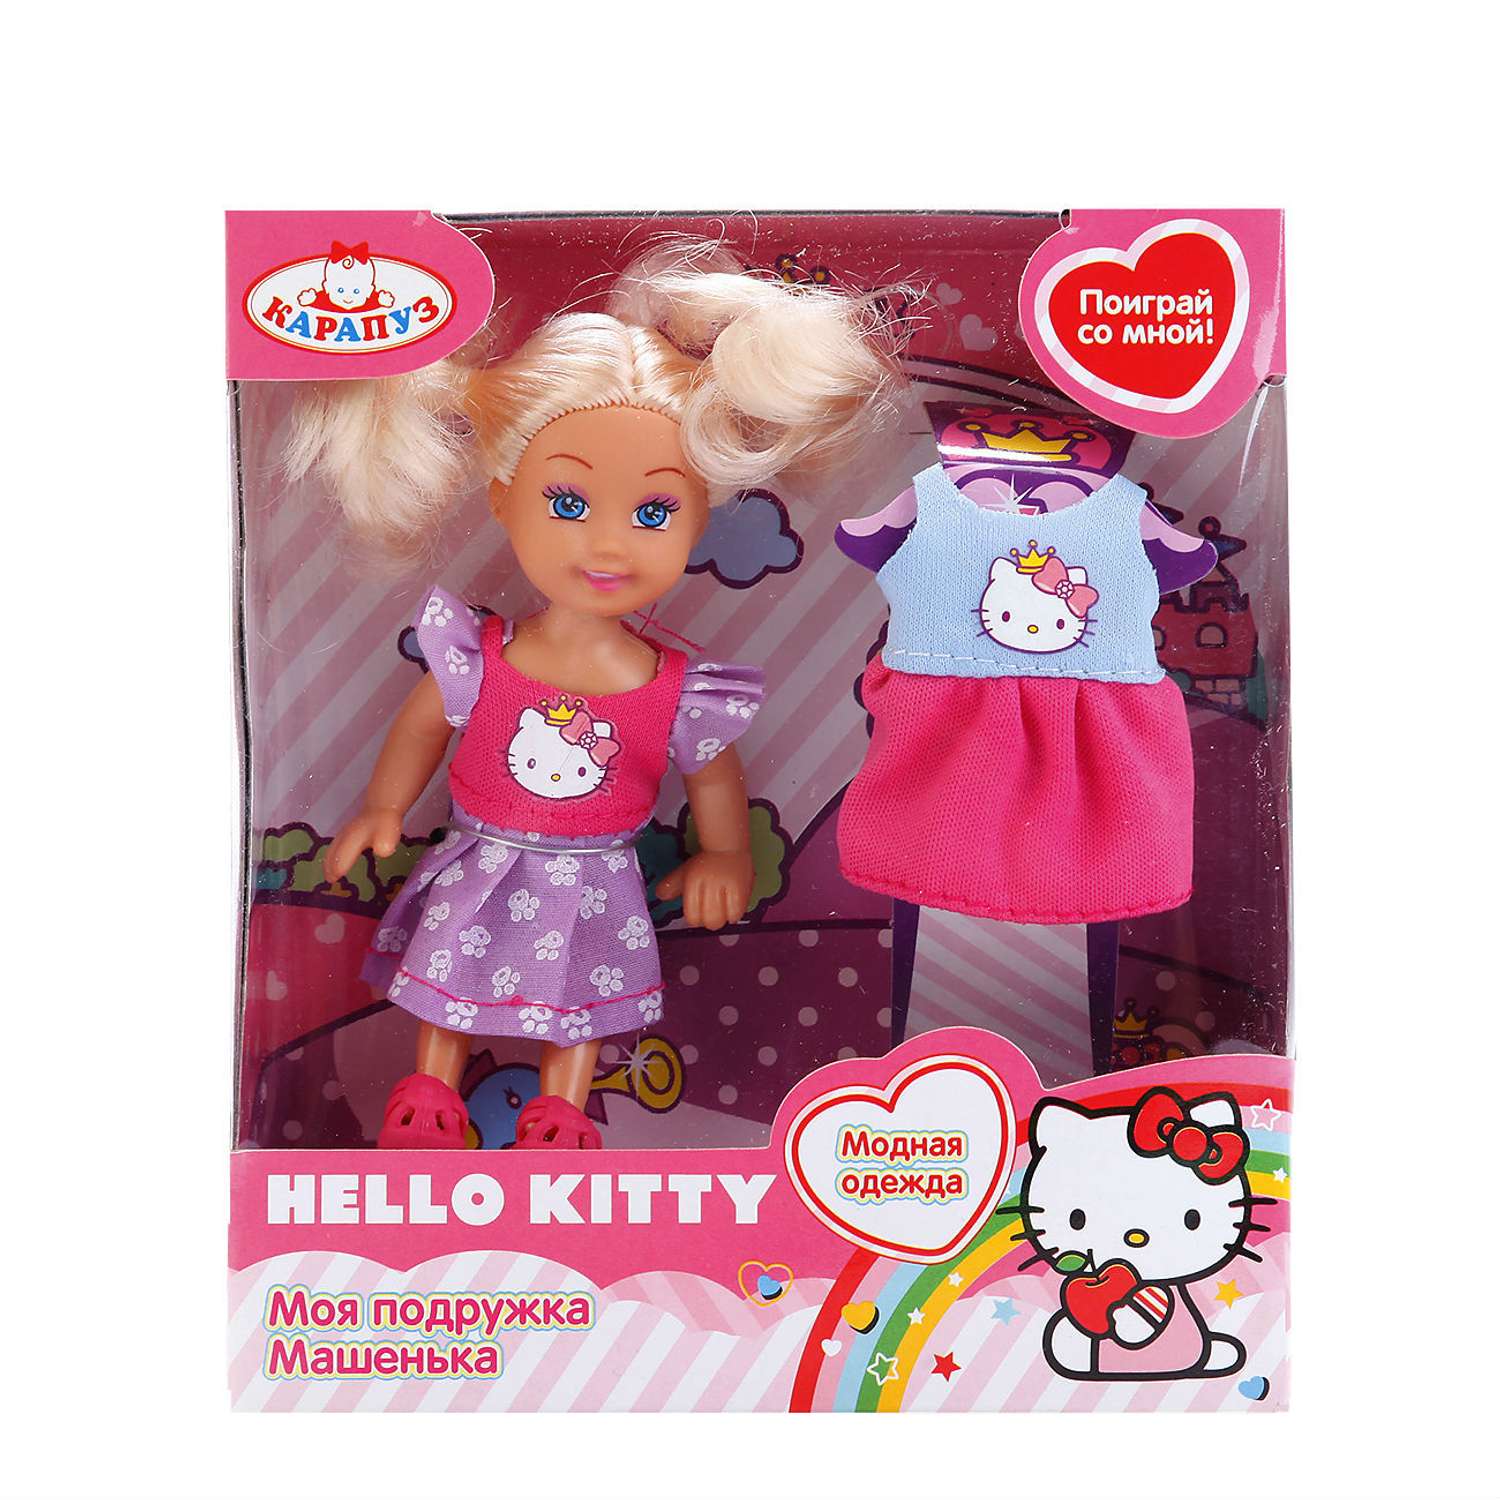 Кукла Карапуз Hello Kitty с комплектом одежды 209217 209217 - фото 6